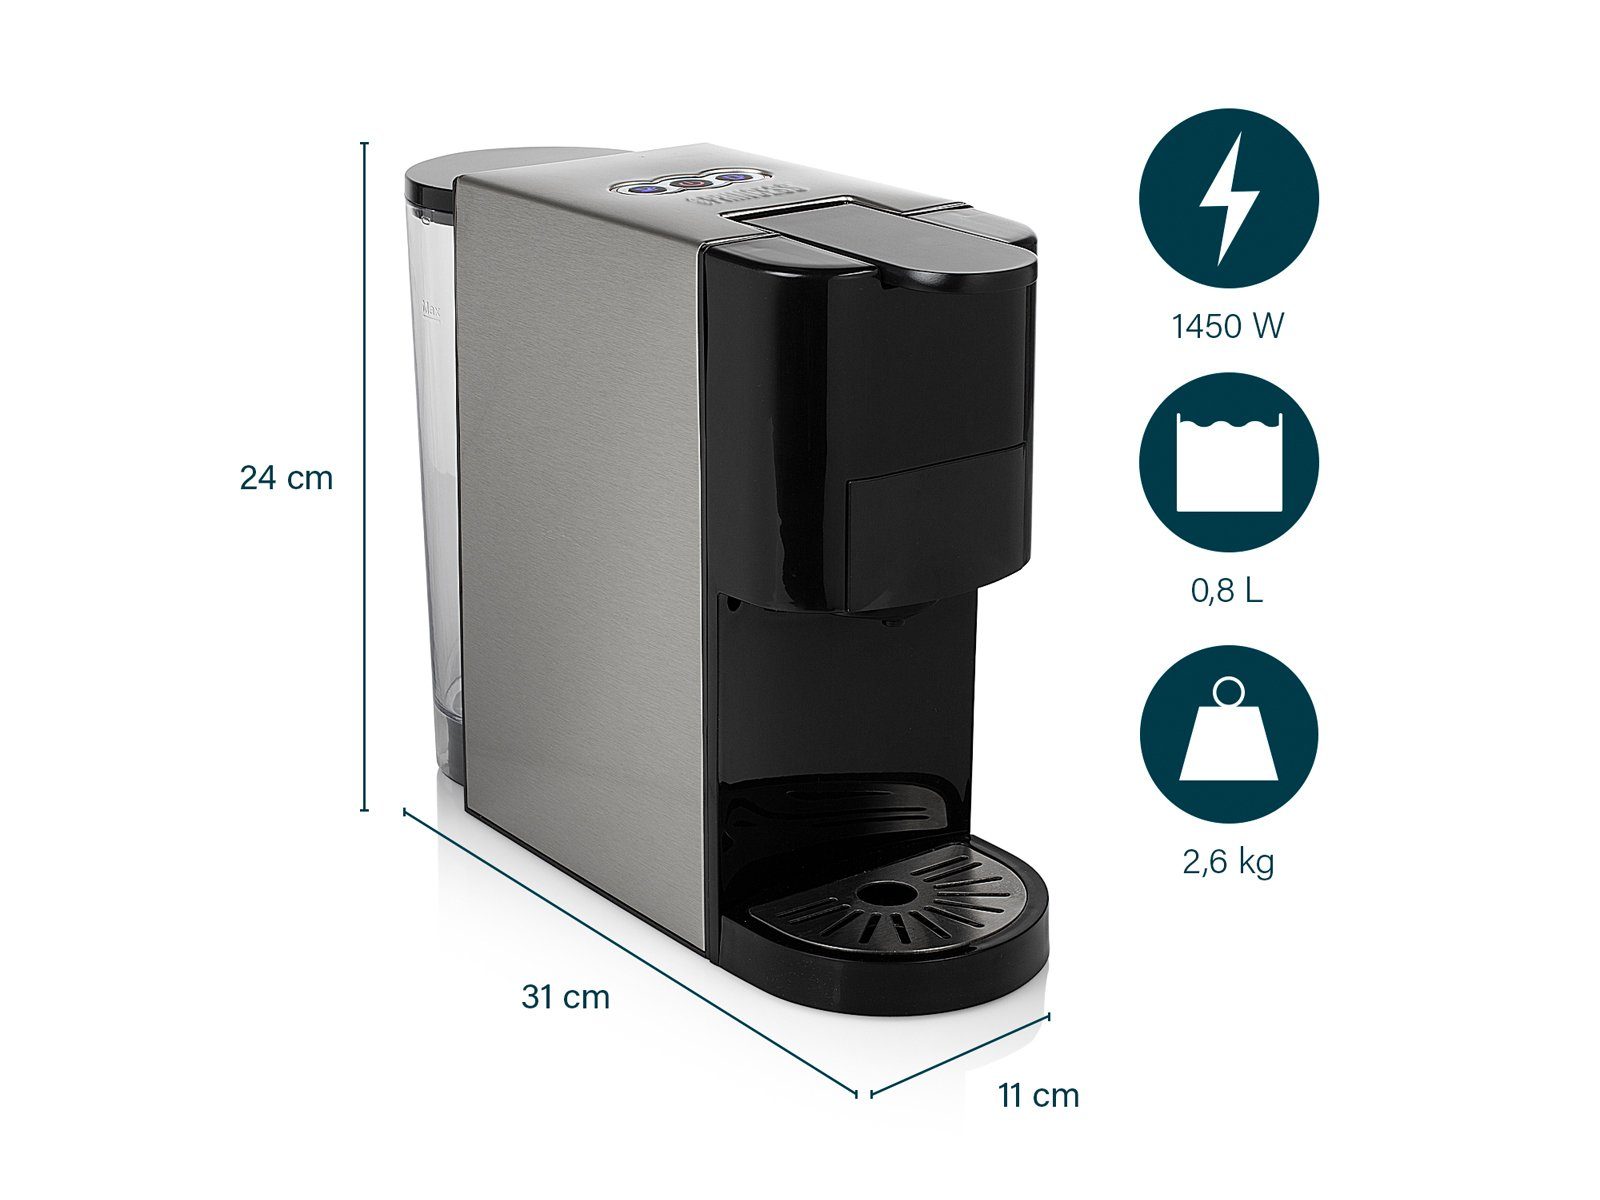 Setpoint Kapselmaschine, Kaffee-Pulver Kapseln Milchkännchen 1 Pad-Maschine Pads Tassen & & ESE